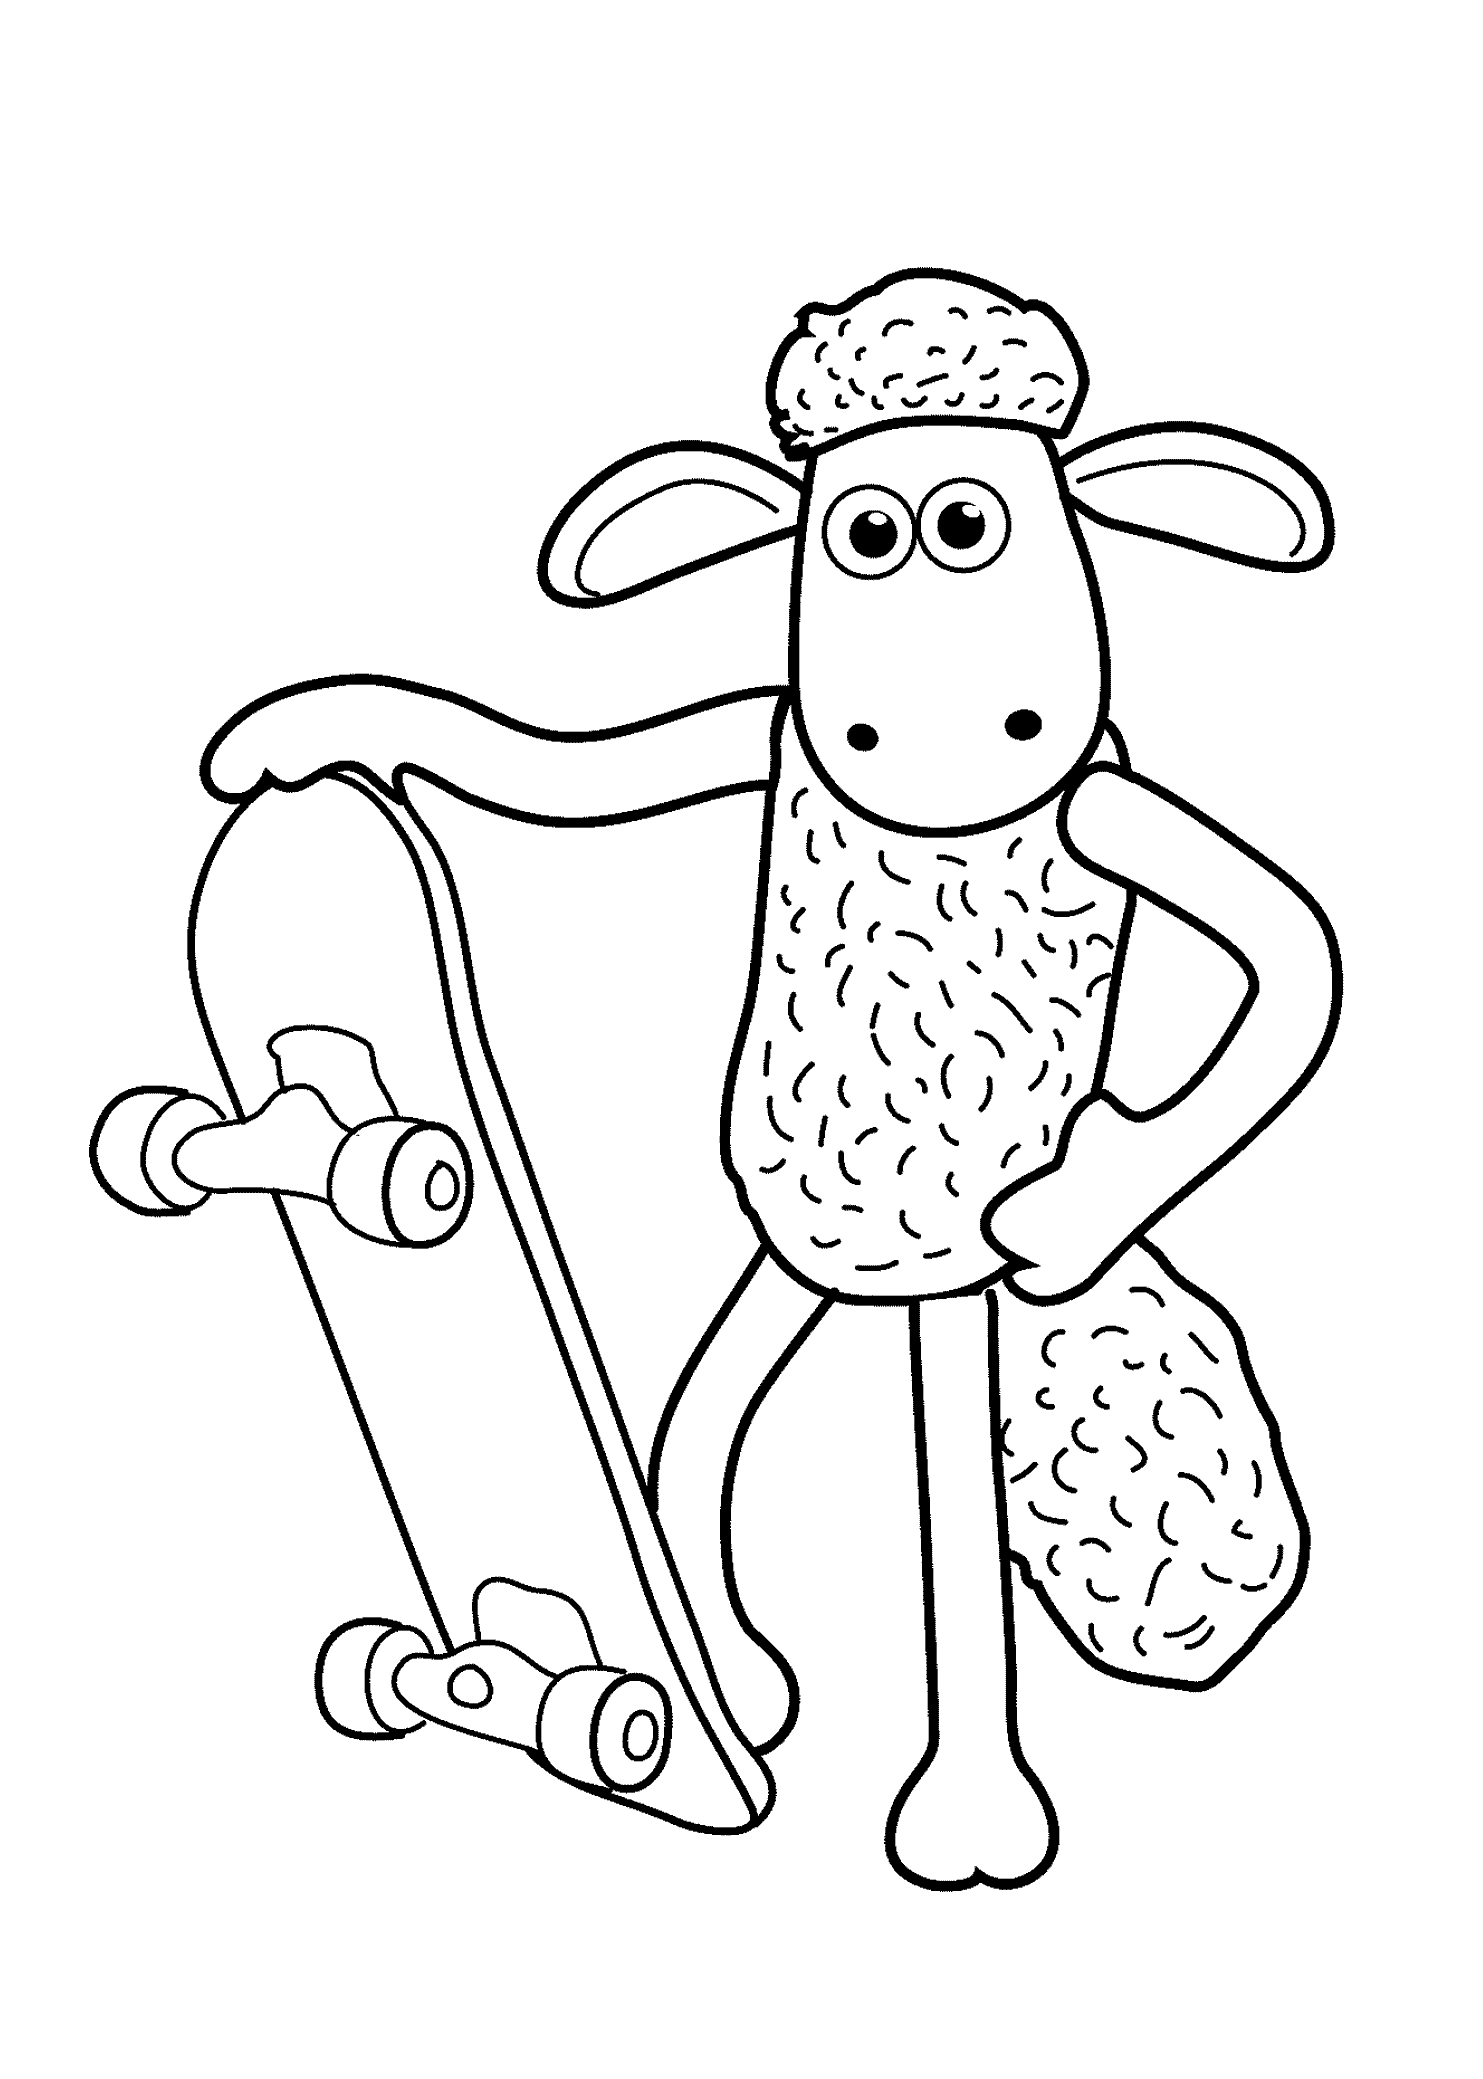 Skateboarding Sheep Coloring Page